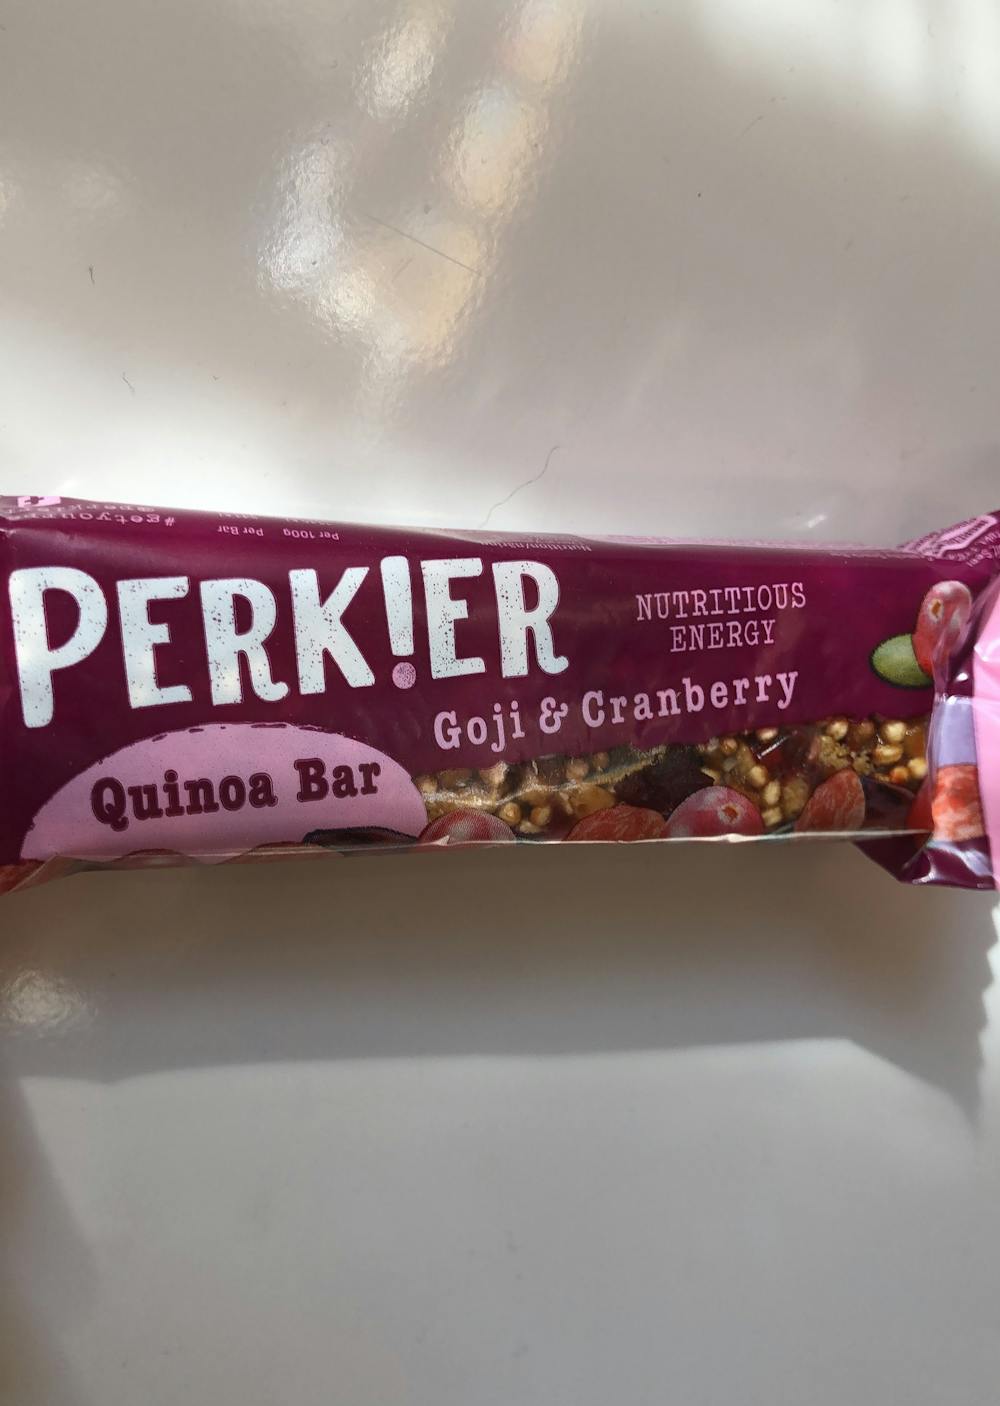 Quinoa bar goji & cranberry, Perkier